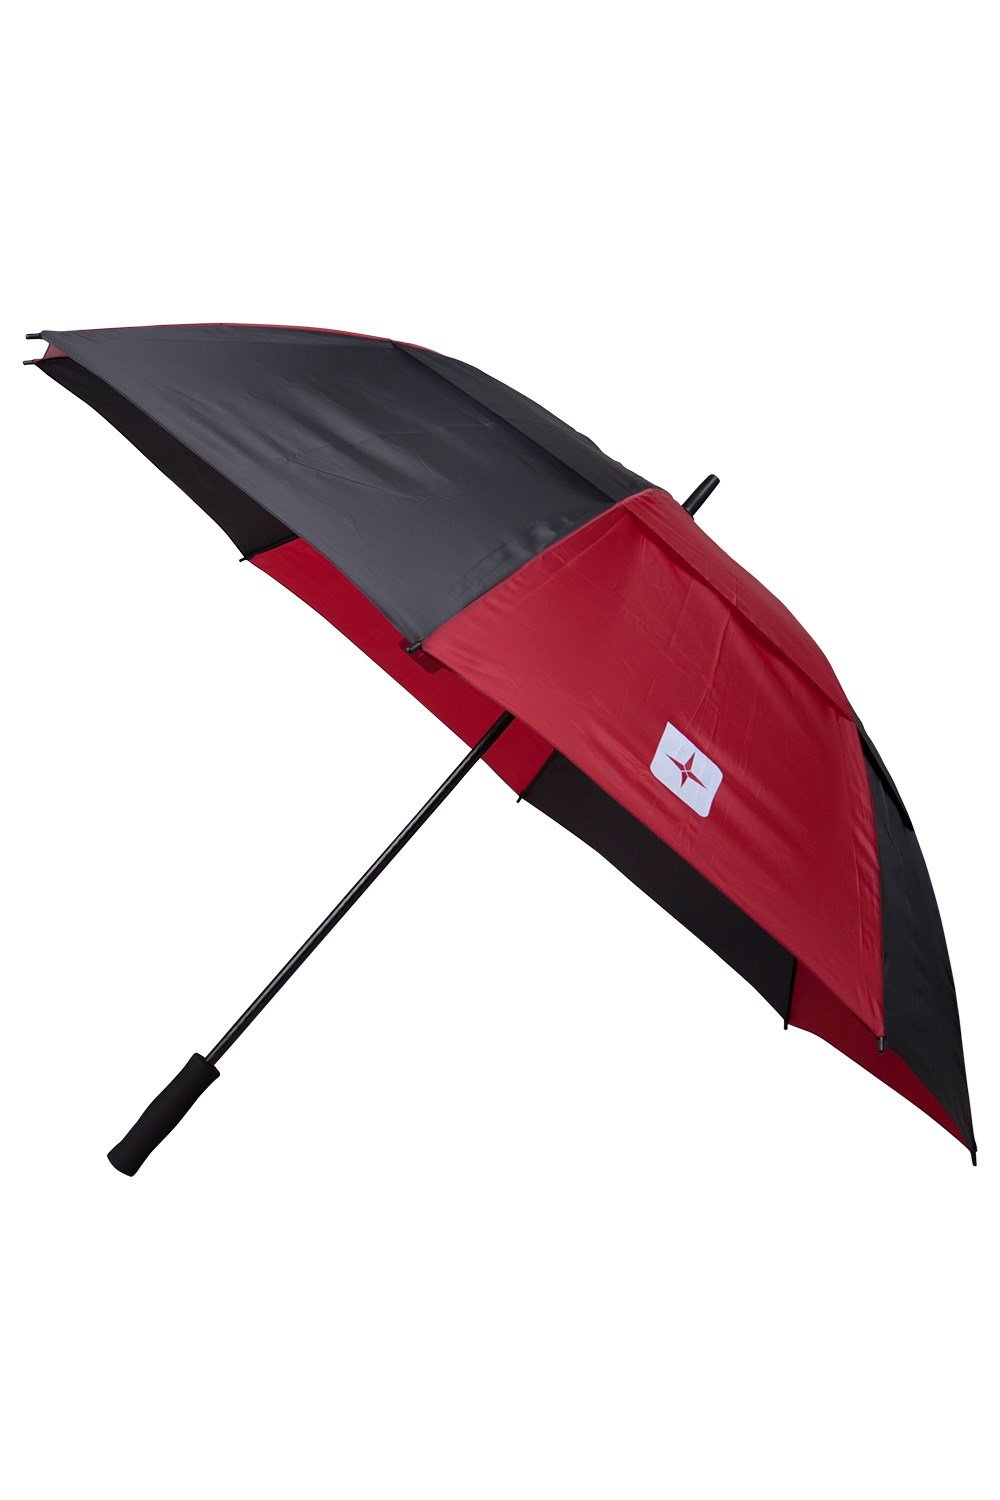 Mountain Warehouse Mountain Warehouse Mini Rain Umbrella Polyester Waterproof Compact Lightweight 